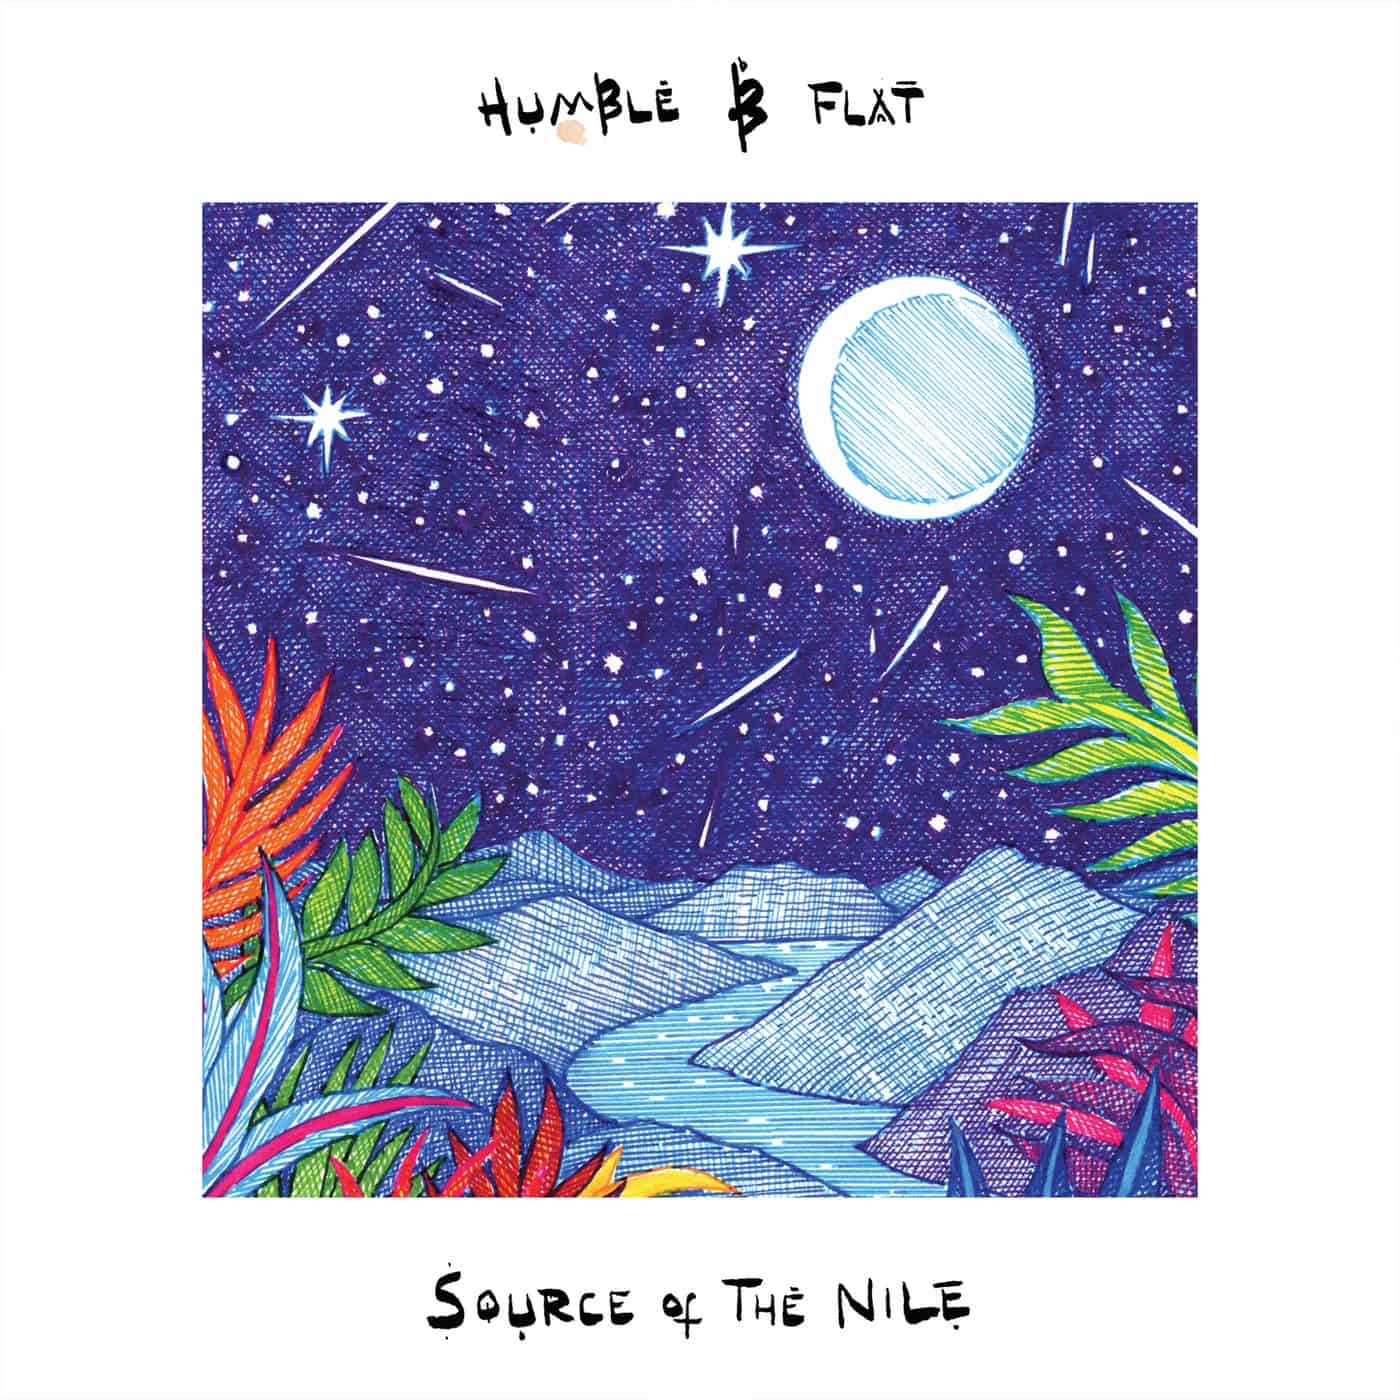 image cover: Humble B Flat, Lisa Toh, Tenderlonious - Source of the Nile / PL008